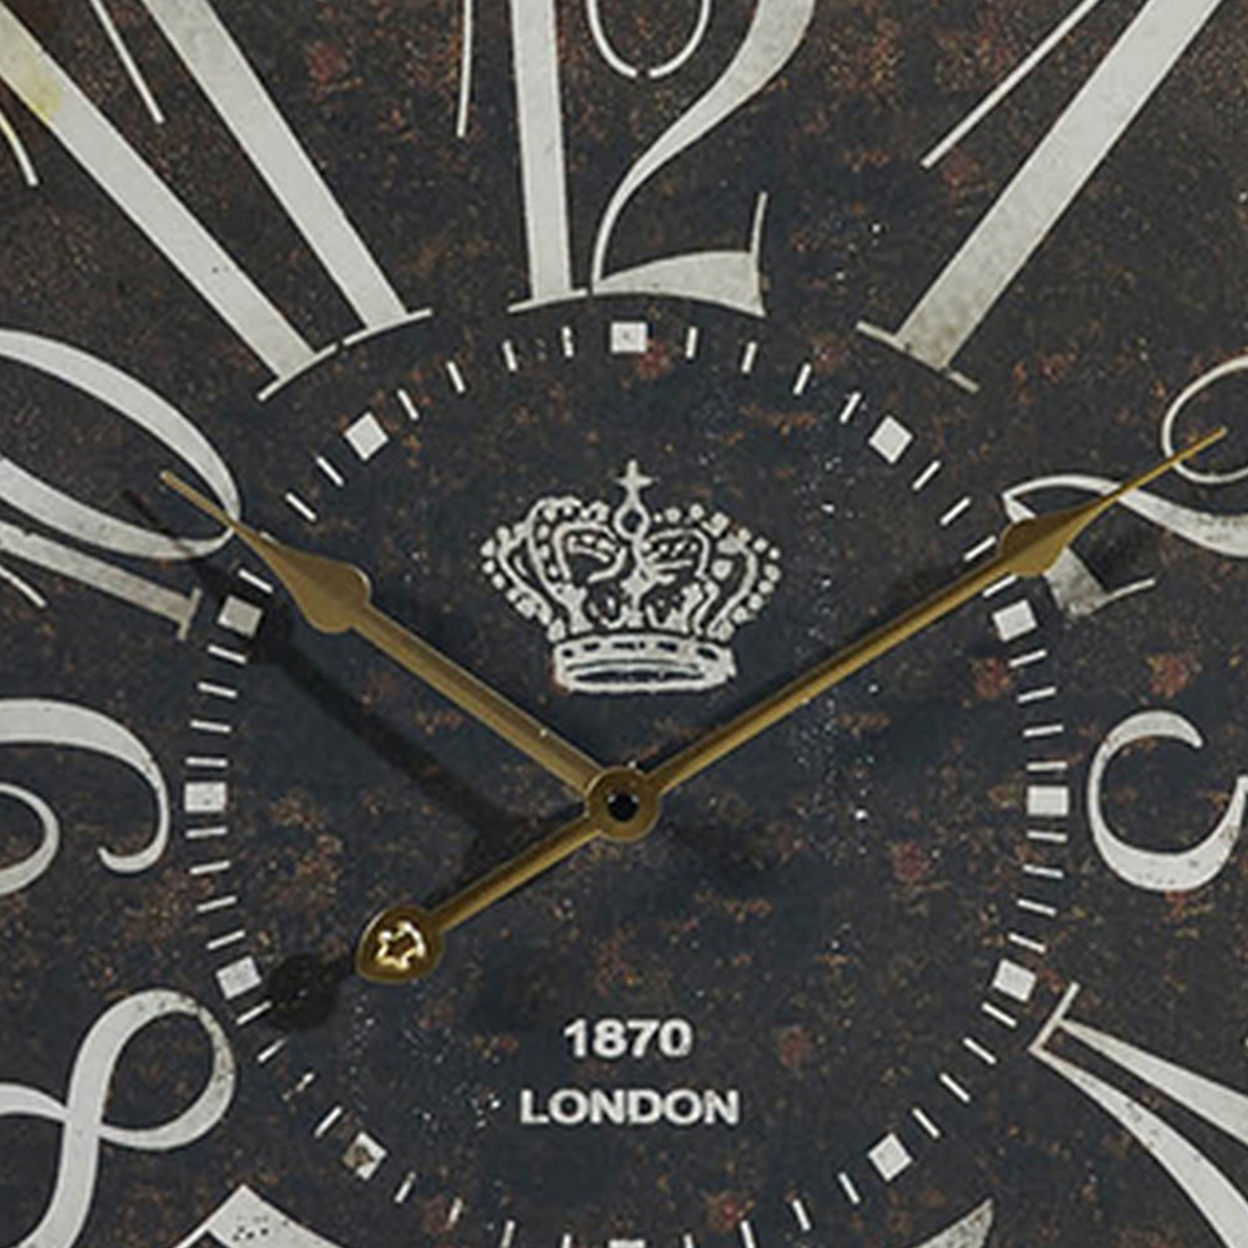 27 Inch Wall Clock, Decor, Vintage Visual Style, Distressed Black Finish- Saltoro Sherpi